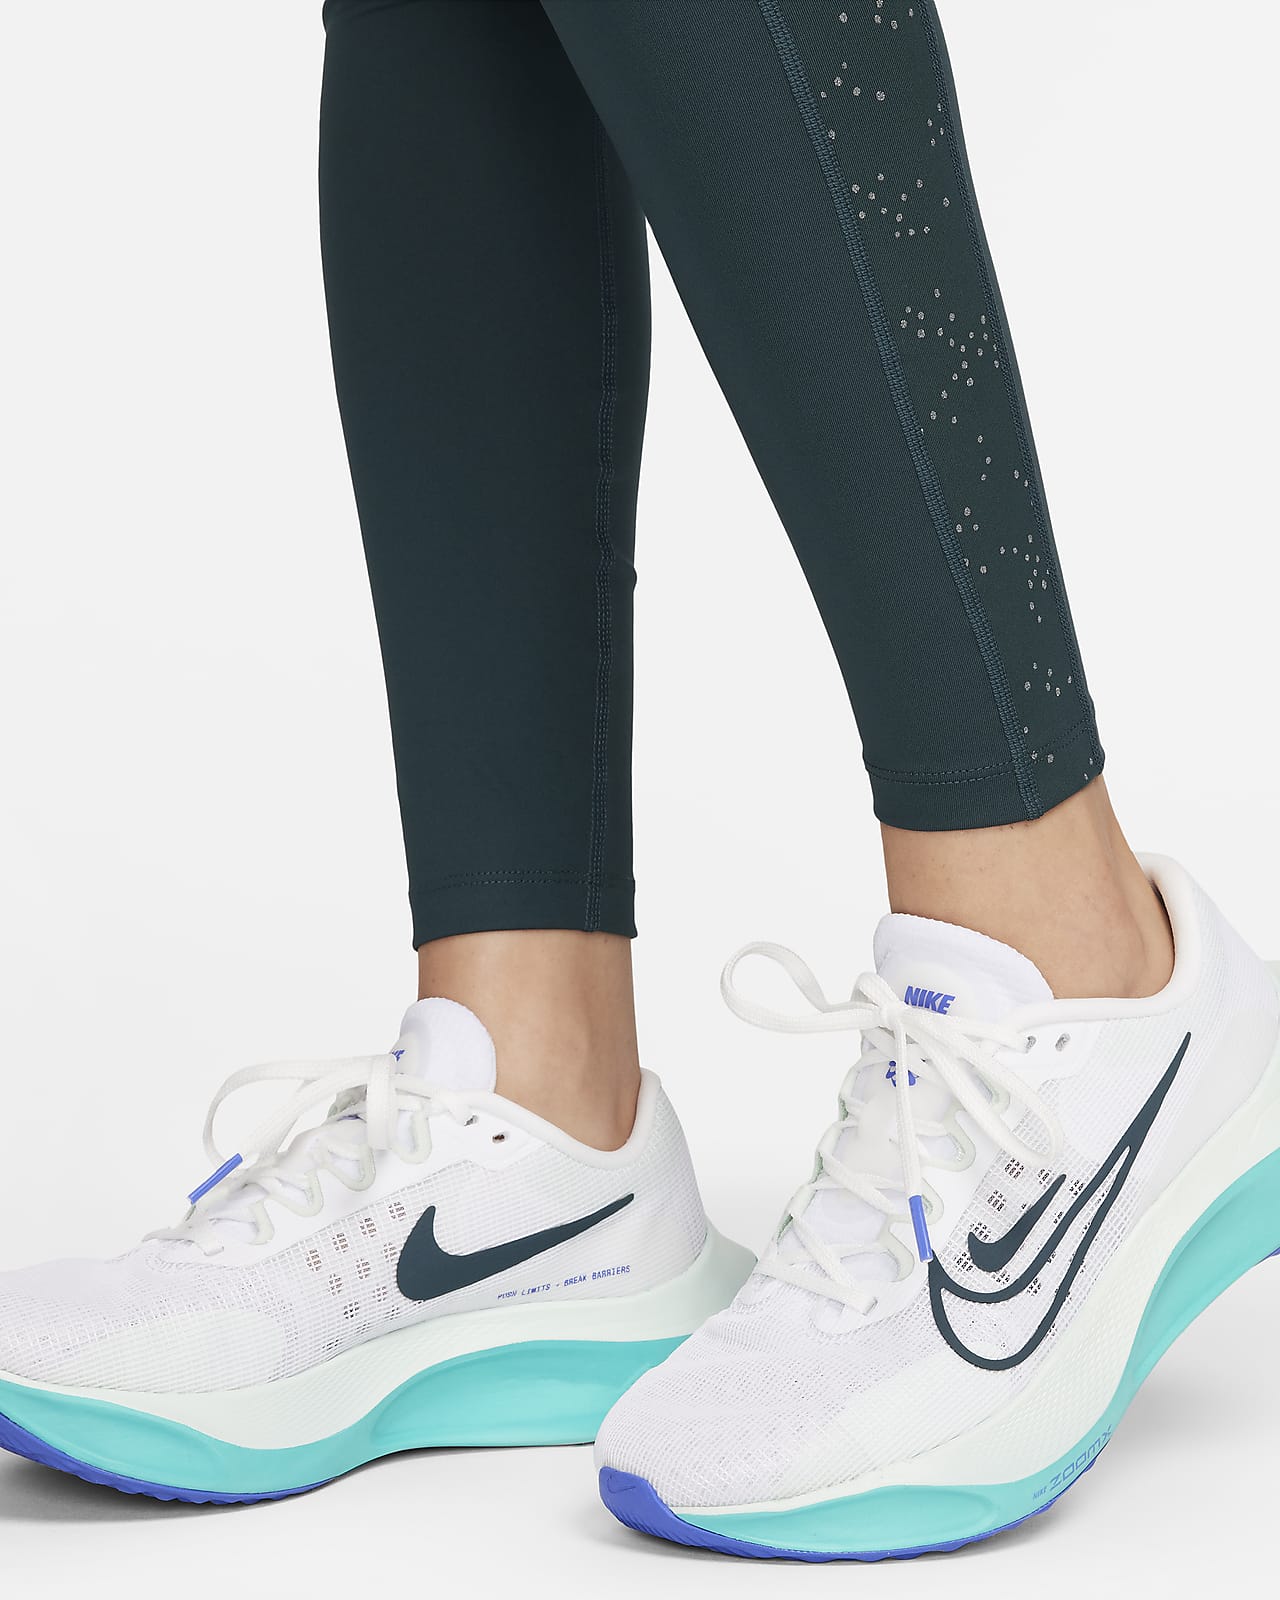 Nike Fast Women's Mid-Rise 7/8 Printed Leggings with Pockets. Nike LU